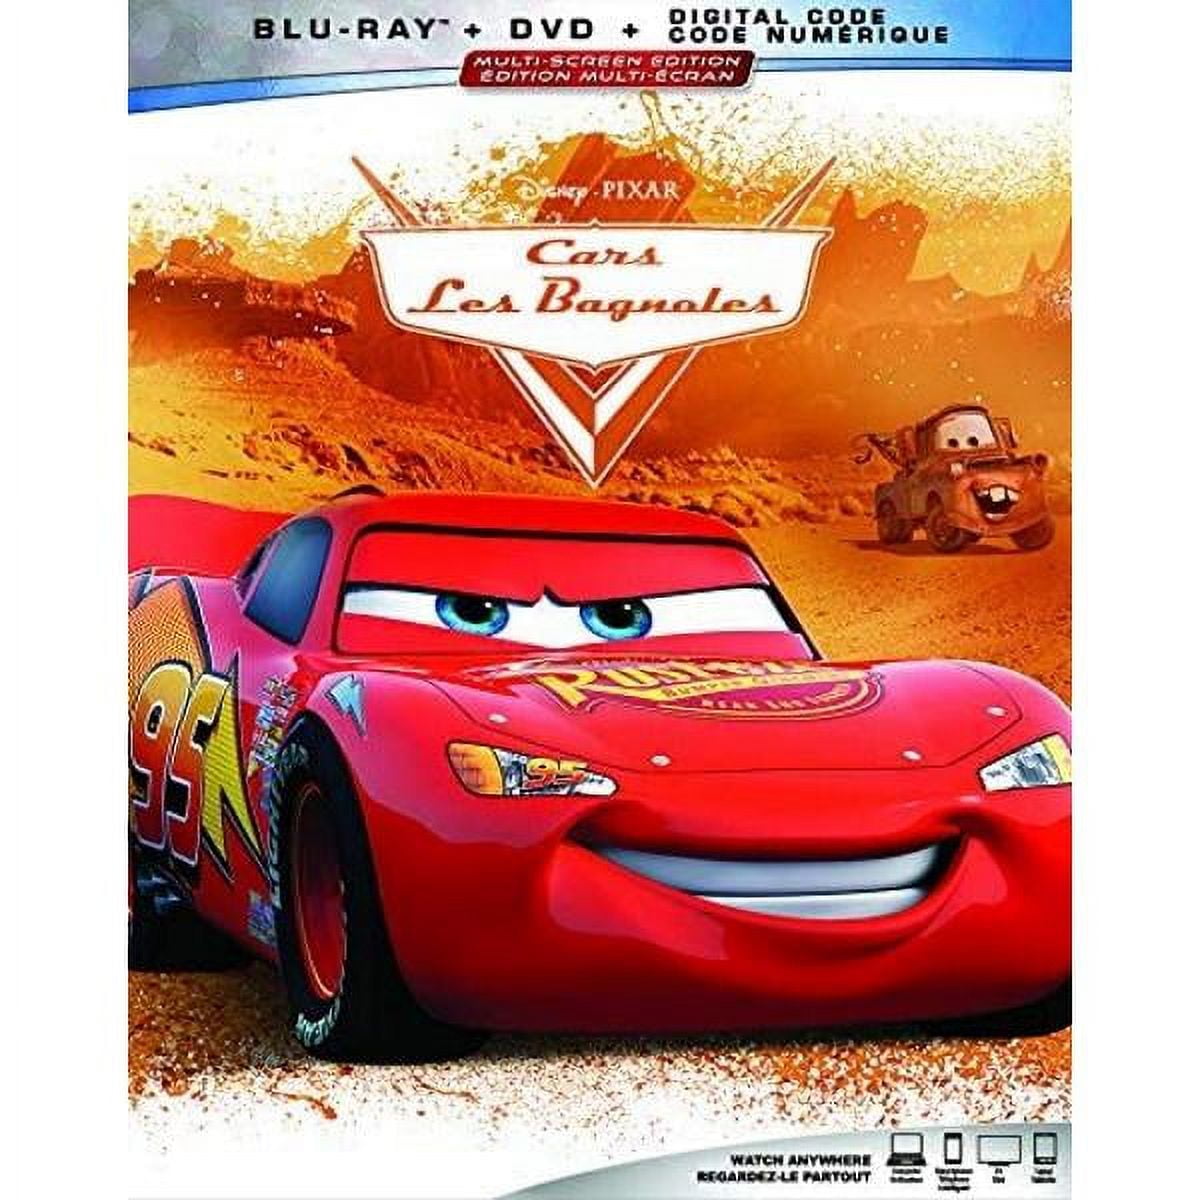 DISNEY PIXAR CARS TRILOGY DVD Box Set Region 2 POLISH $18.37